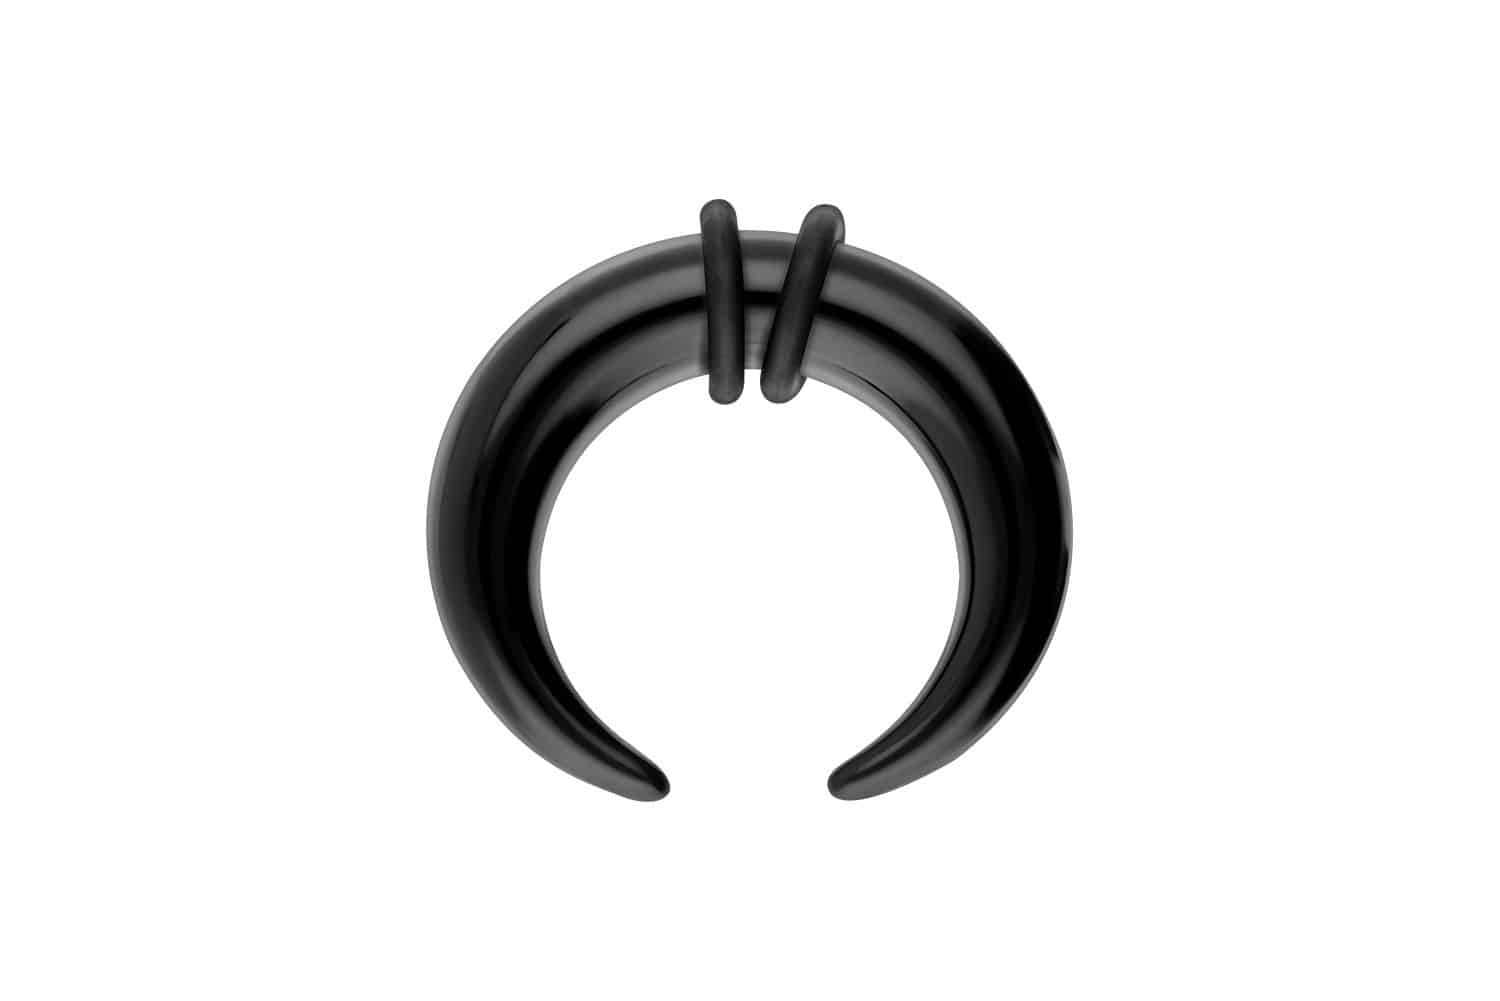 Acrylic buffalo ring